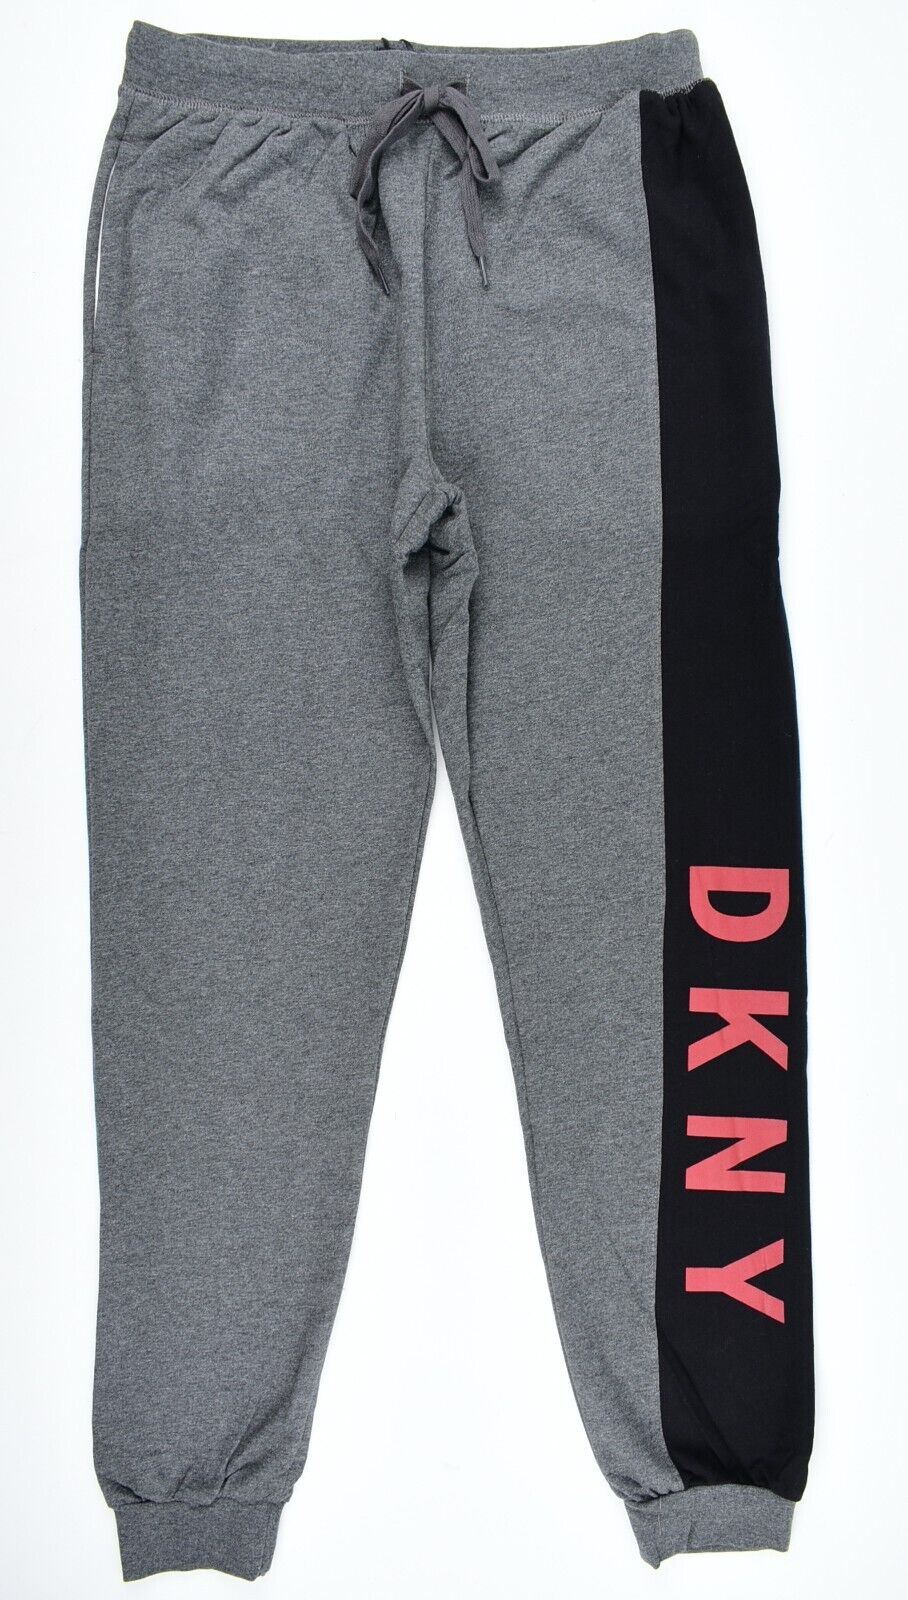 DKNY Mens Lounge Pants /Sweatpants, Grey-Black, size MEDIUM